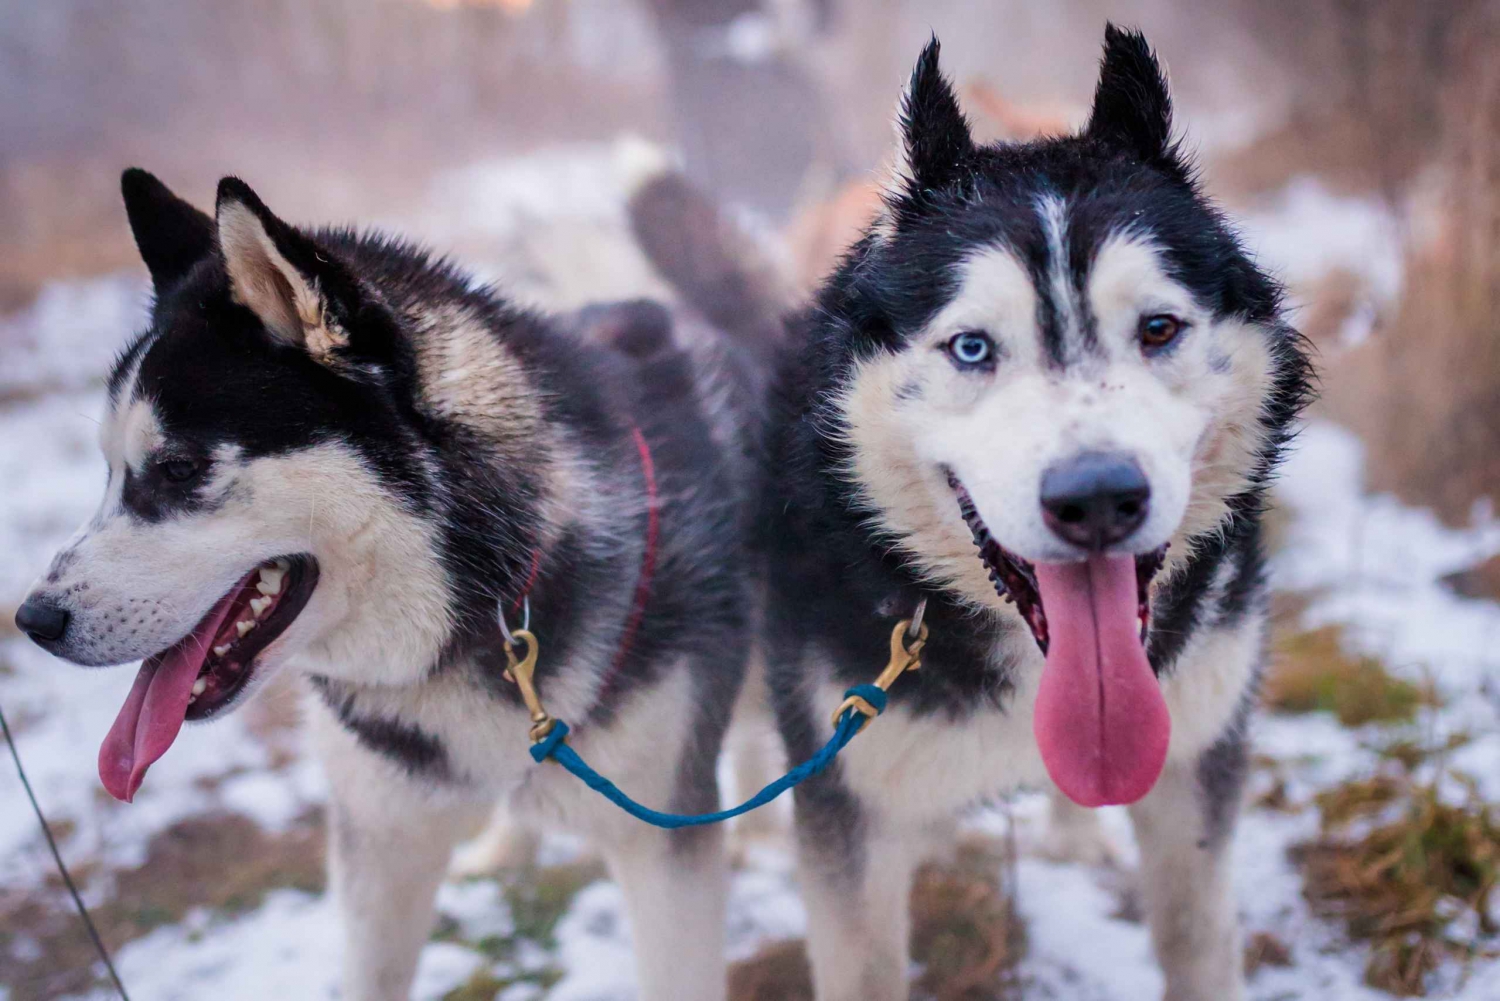 Da Cracovia: Giro in slitta trainata da cani sui Monti Tatra